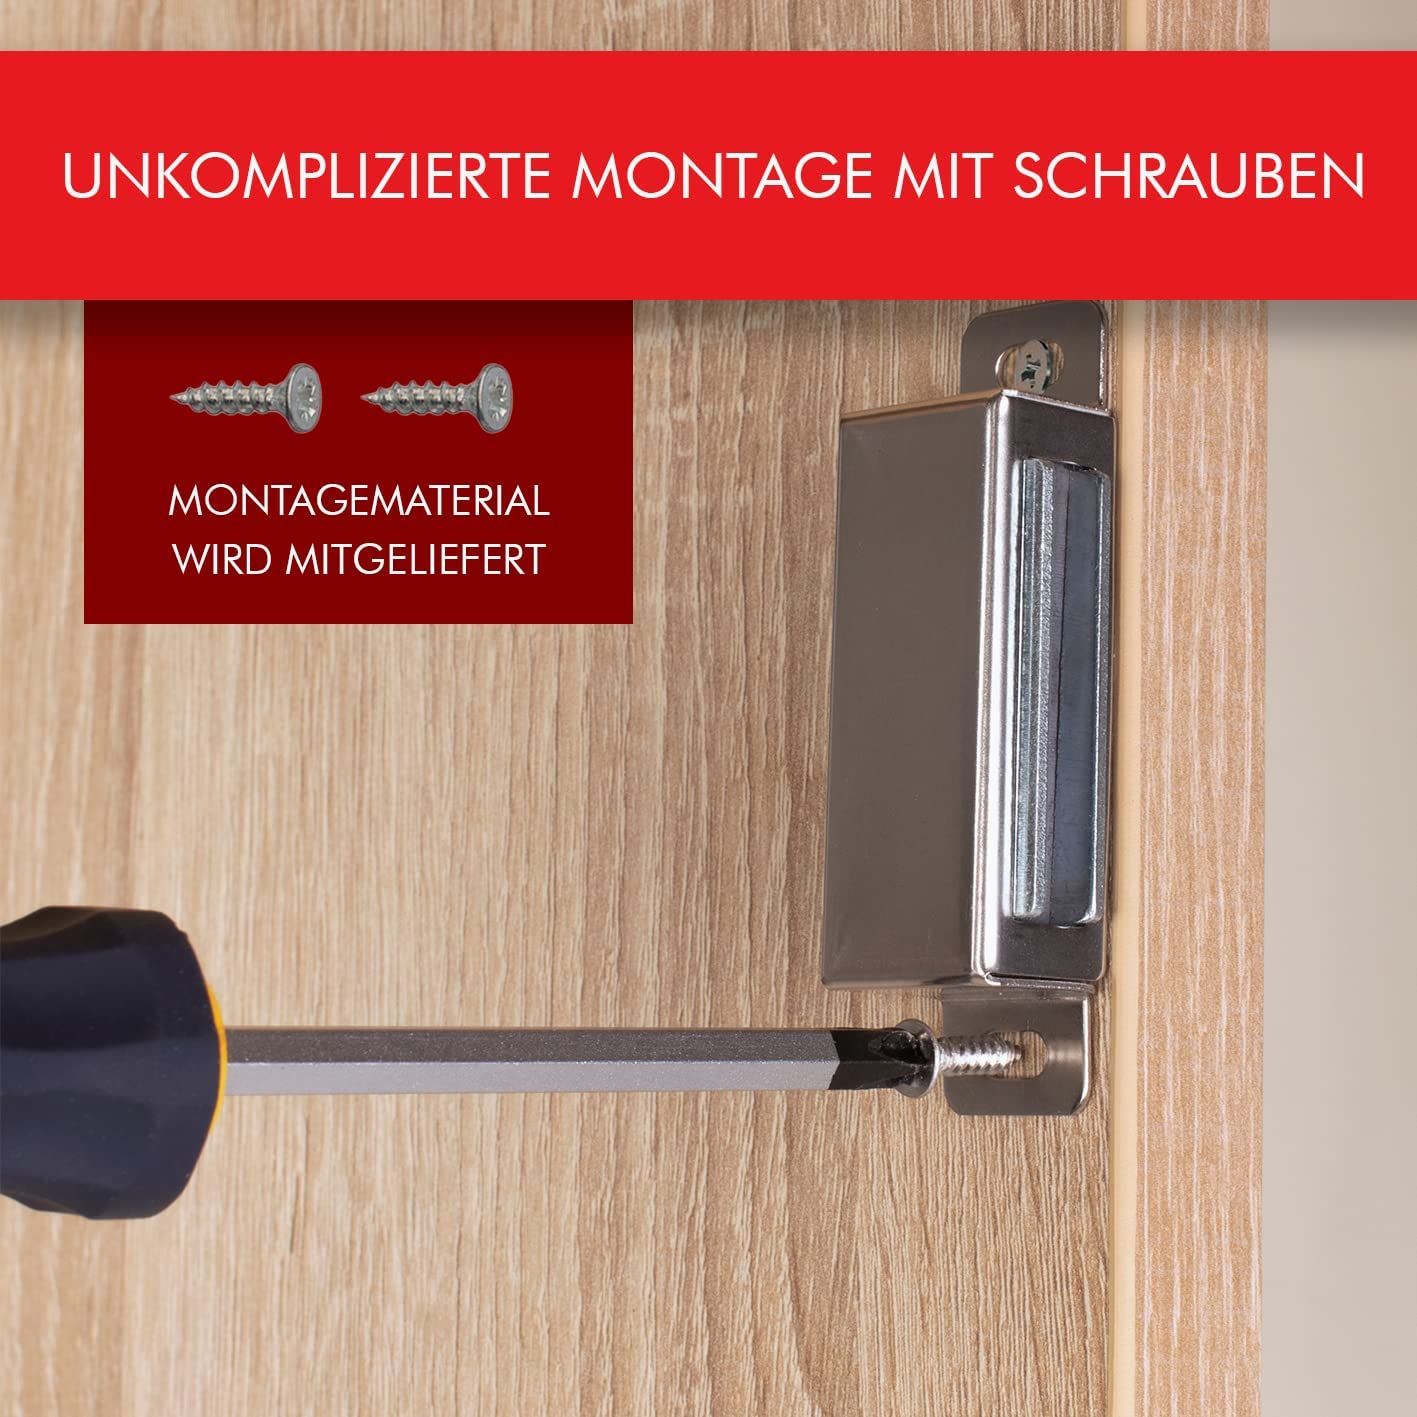 LouMaxx Magnetschnäpper stark - Haltekraft 4kg - 4er Set aus Edelstahl – Türmagnet - Schrankmagnet – Möbelmagnete